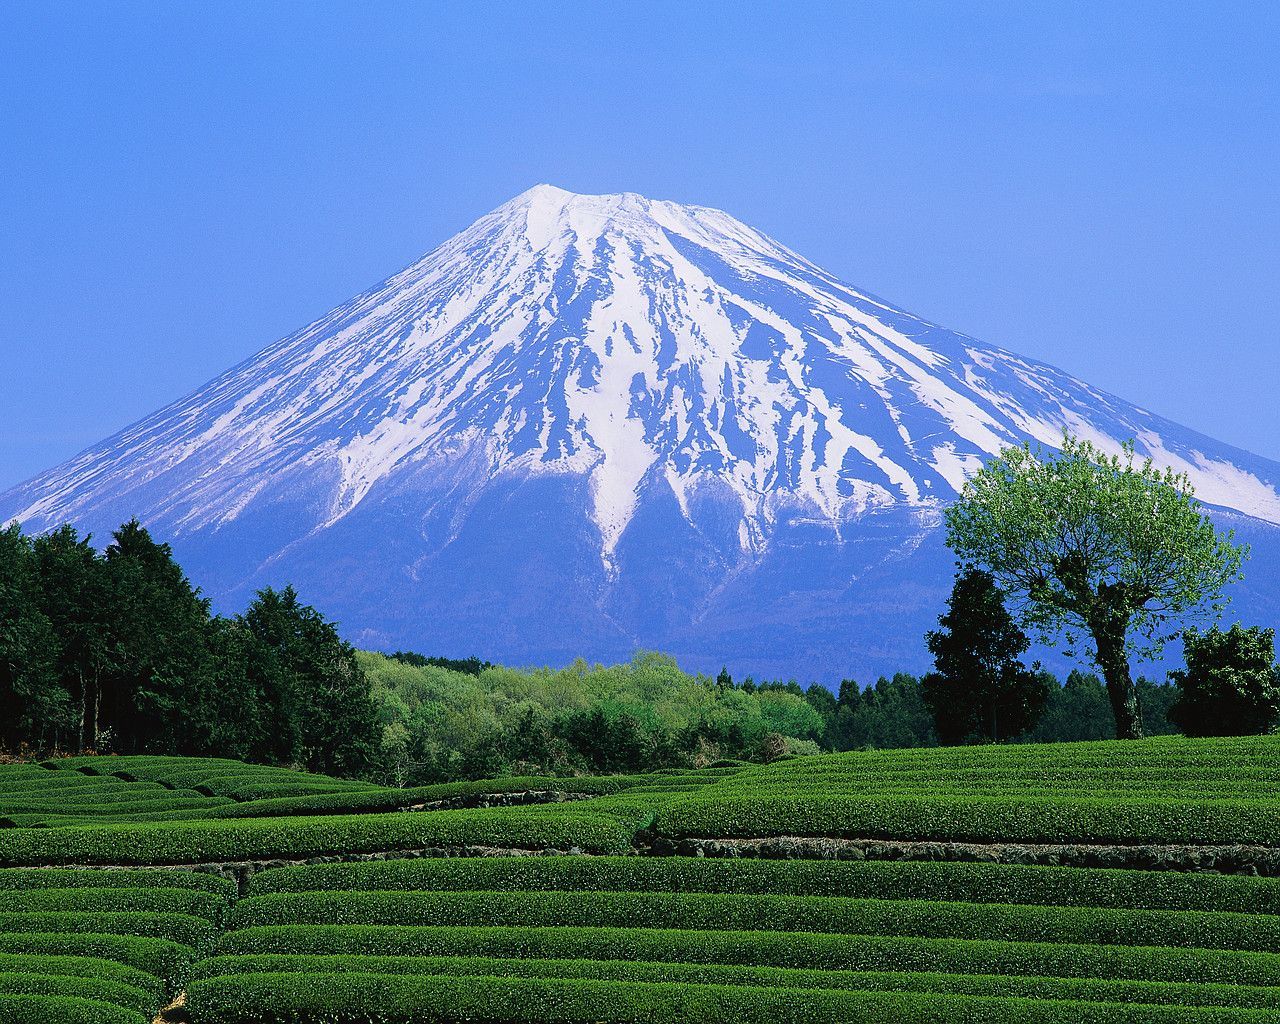 Green Tea Field And Mount Fuji Shizuoka Japan. Mount fuji